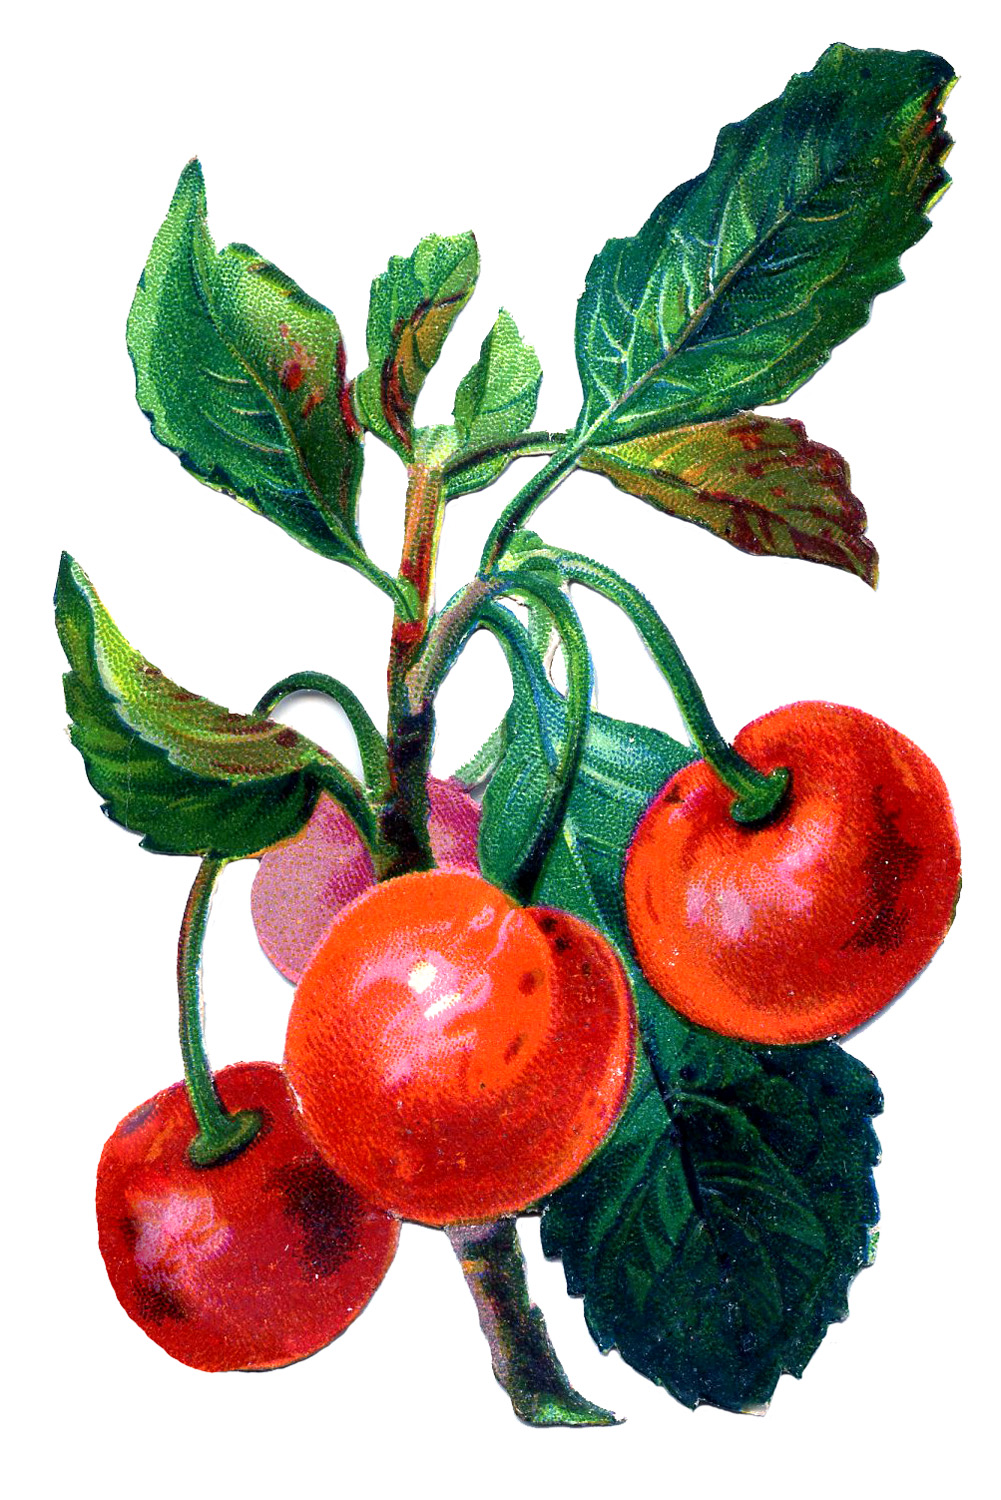 Vintage Fruit Graphic - Cherries - The Graphics Fairy